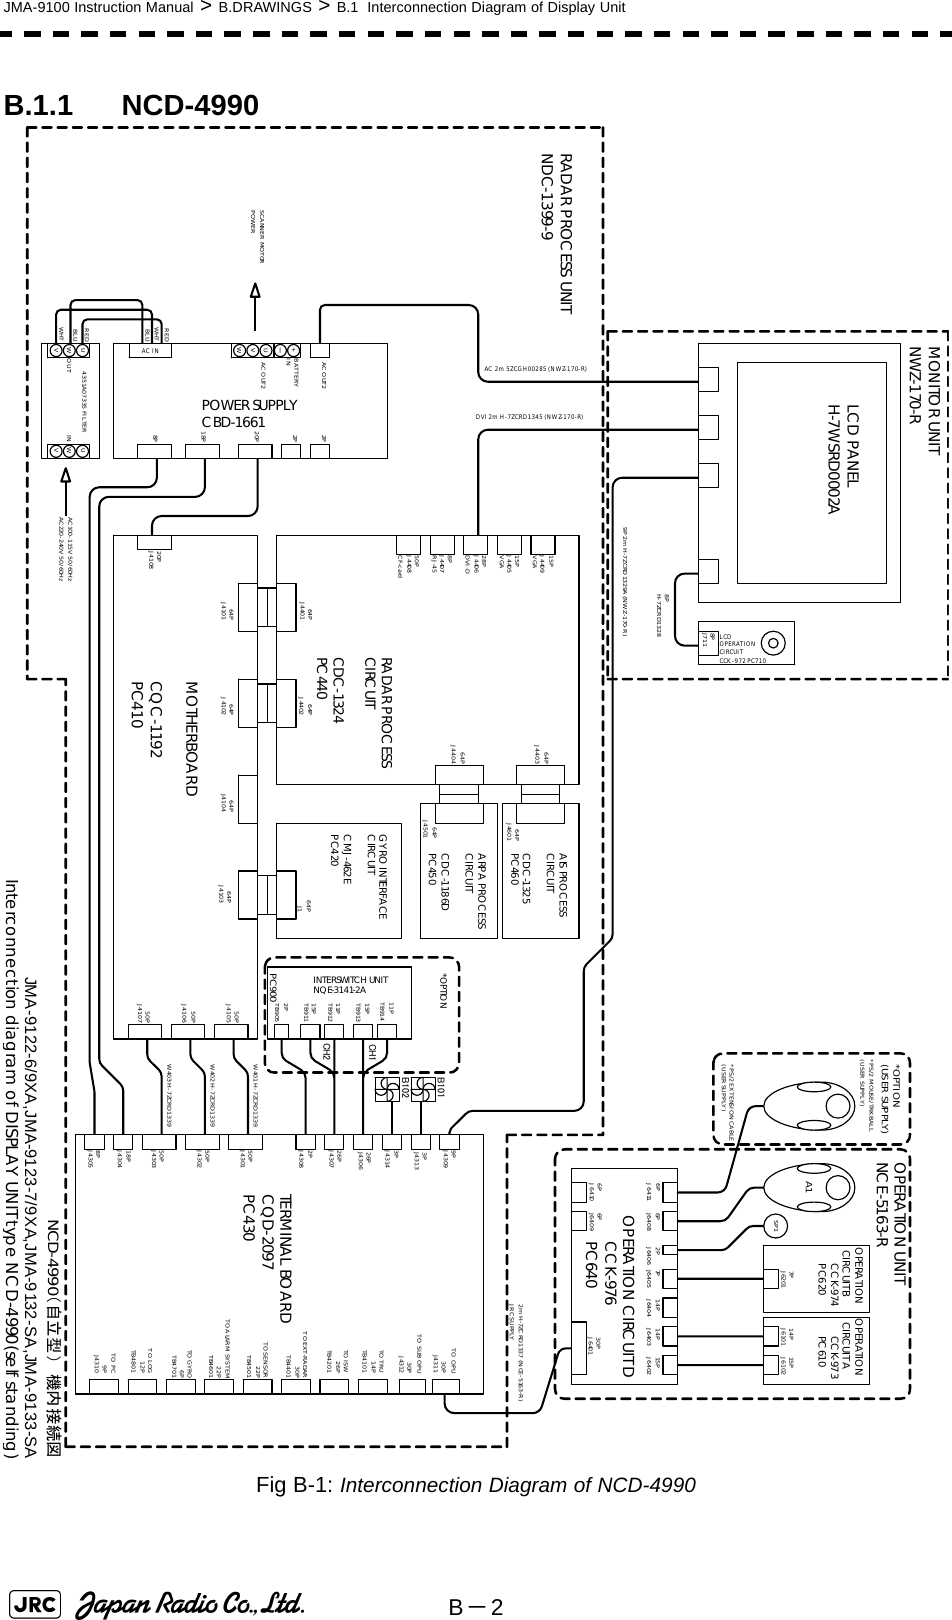 B－2JMA-9100 Instruction Manual &gt; B.DRAWINGS &gt; B.1  Interconnection Diagram of Display UnitB.1.1 NCD-4990Fig B-1: Interconnection Diagram of NCD-49902PJ430826PJ430726PJ430650PJ430118PJ43048PJ43053PJ43133PJ43149PJ430914PTB4101TO TRUTO ISW26PTB4201TO EXT-RADAR30PTB4401TO SEN SOR22PTB4501TO A LARM  SYSTEM22PTB4601TO GYRO6PTB4701TO LOG12PTB4801TO PC9PJ4310TERMINAL BOARDCQD-2097PC43050PJ430250PJ430330PJ4311TO OPU30PJ4312TO SUB OPU6PJ64116PJ6410 6PJ64096PJ6408 2PJ6406 7PJ6405 14PJ6404 14PJ6403 15 PJ640230PJ6401OPERATION CIRCUIT D      CCK-976      PC64014PJ6101 15 PJ6102OPERATION  CIRCUIT A      CCK-973      PC6107PJ6201OPERATION  CIRCUIT B      CCK-974      PC620SP1A1*PS/2 EXTENSION  CABLE(USER SUPPLY )OPERATION UNITNCE-5163-R2 m H - 7ZC RD 133 7  (N CE- 5 16 3 -R )JR C SU PPLYB101B102PC90011PTB91415PTB91311PTB91215PTB9112PTB905INTERSWITCH UNITNQE-3141-2ACH1CH250PJ410550PJ410650PJ4107*OPTIONW401 H-7ZCRD1339W402 H-7ZCRD1339W403 H-7ZCRD133964PJ410364PJ410464PJ410264PJ410164PJ4401 64PJ4402 64PJ1GYRO INTERFACECIRCUITCMJ-462EPC420RADAR PROCESSCIRCUITCDC-1324PC440MOTHERBOARDCQC-1192PC41064PJ440364PJ4404AIS PROCESSCIRCUITCDC-1325PC46064PJ460164PJ4501ARPA PROCESSCIRCUITCDC-1186DPC45015PJ4409VGA15PJ4405VGA28PJ4406DVI-D8PJ4407RJ-4550PJ4408CF-cardLCDOPERATIONCIRCUITCCK -972 PC7108PJ711MONITOR UNITNWZ-170-RLCD PANELH-7WSRD0002A8PH-7ZCRD13289P 2m  H-7ZCRD1329A  (NWZ-170-R)DVI 2m  H-7ZCRD1345 (NWZ-170-R)20PJ41088PPOWER SUPPLYCBD-166118P20P*PS/2 MOUSE/TRKBALL(USER SUPPLY)*OPTION(USER SUPPLY)2P2PAC OUT2+ーUVWBATTERYINAC OUT2AC INUWVUWV4351A07335 FILTERINOUTREDWHTBLUREDWHTBLUAC 2m 5ZCGH00285 (NWZ-170-R)AC100-115V 50/60HzAC220-240V 50/60HzSCANNER MOTORPOWER NCD-4990（自立型）　機内接続図Interconnection diagram of DISPLAY UNIT type NCD-4990(self standing)JMA-9122-6/9XA,JMA-9123-7/9XA,JMA-9132-SA,JMA-9133-SARADAR PROCESS UNITNDC-1399-9